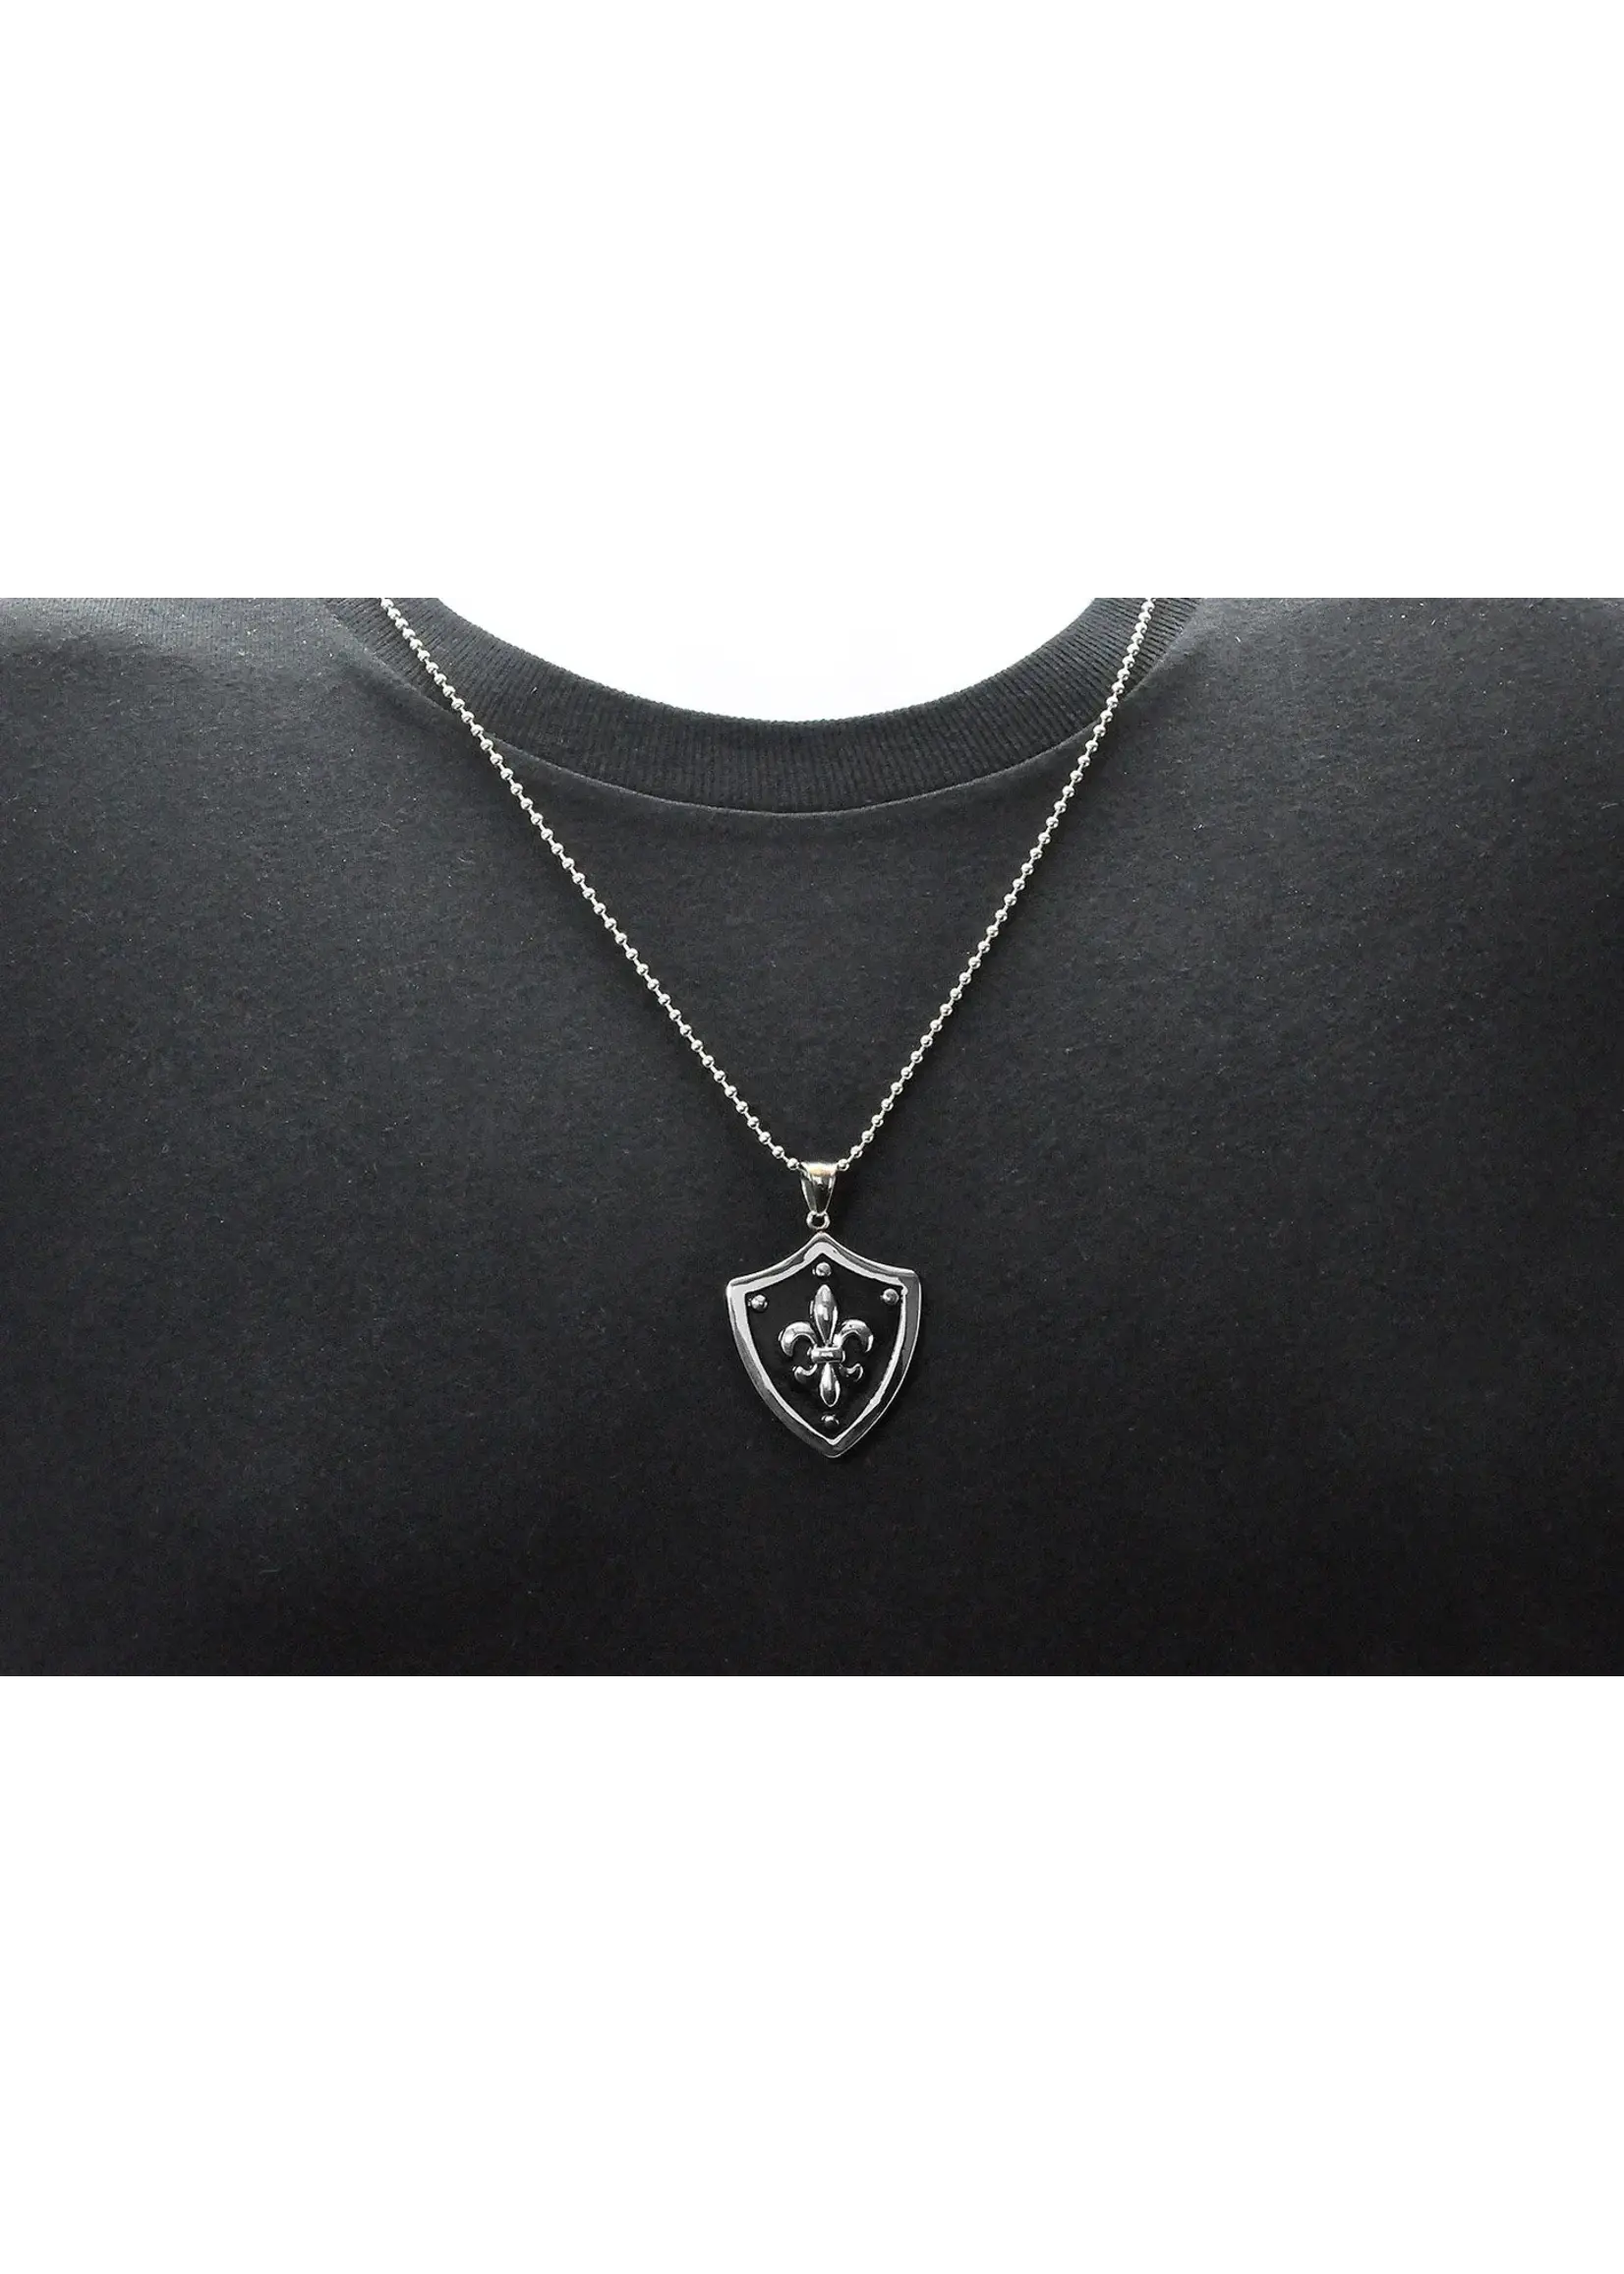 Blackjack Mens Jewelry Shield Pendant necklace